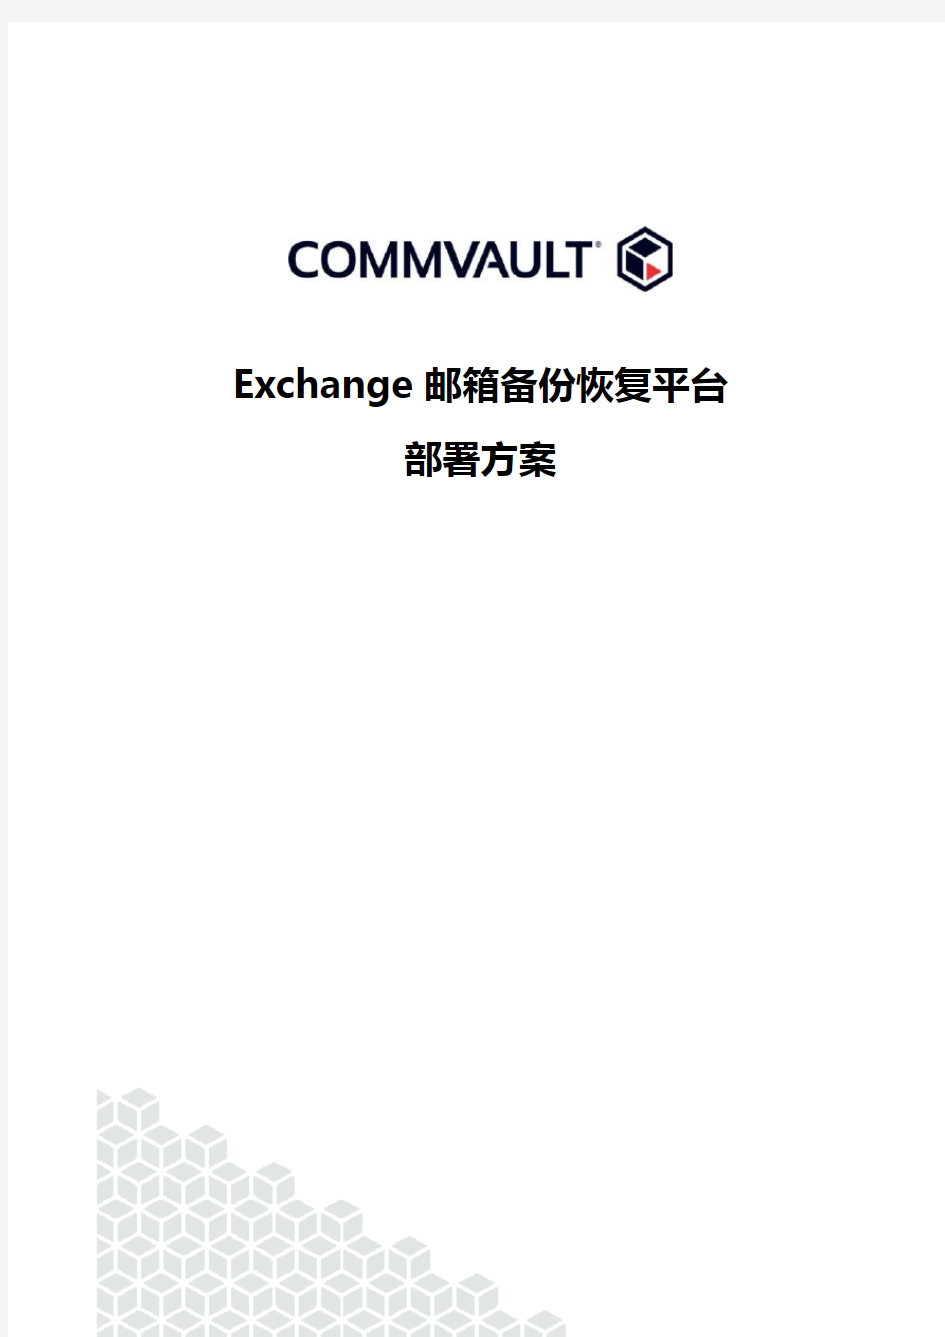 Exchange邮箱备份恢复平台-部署方案